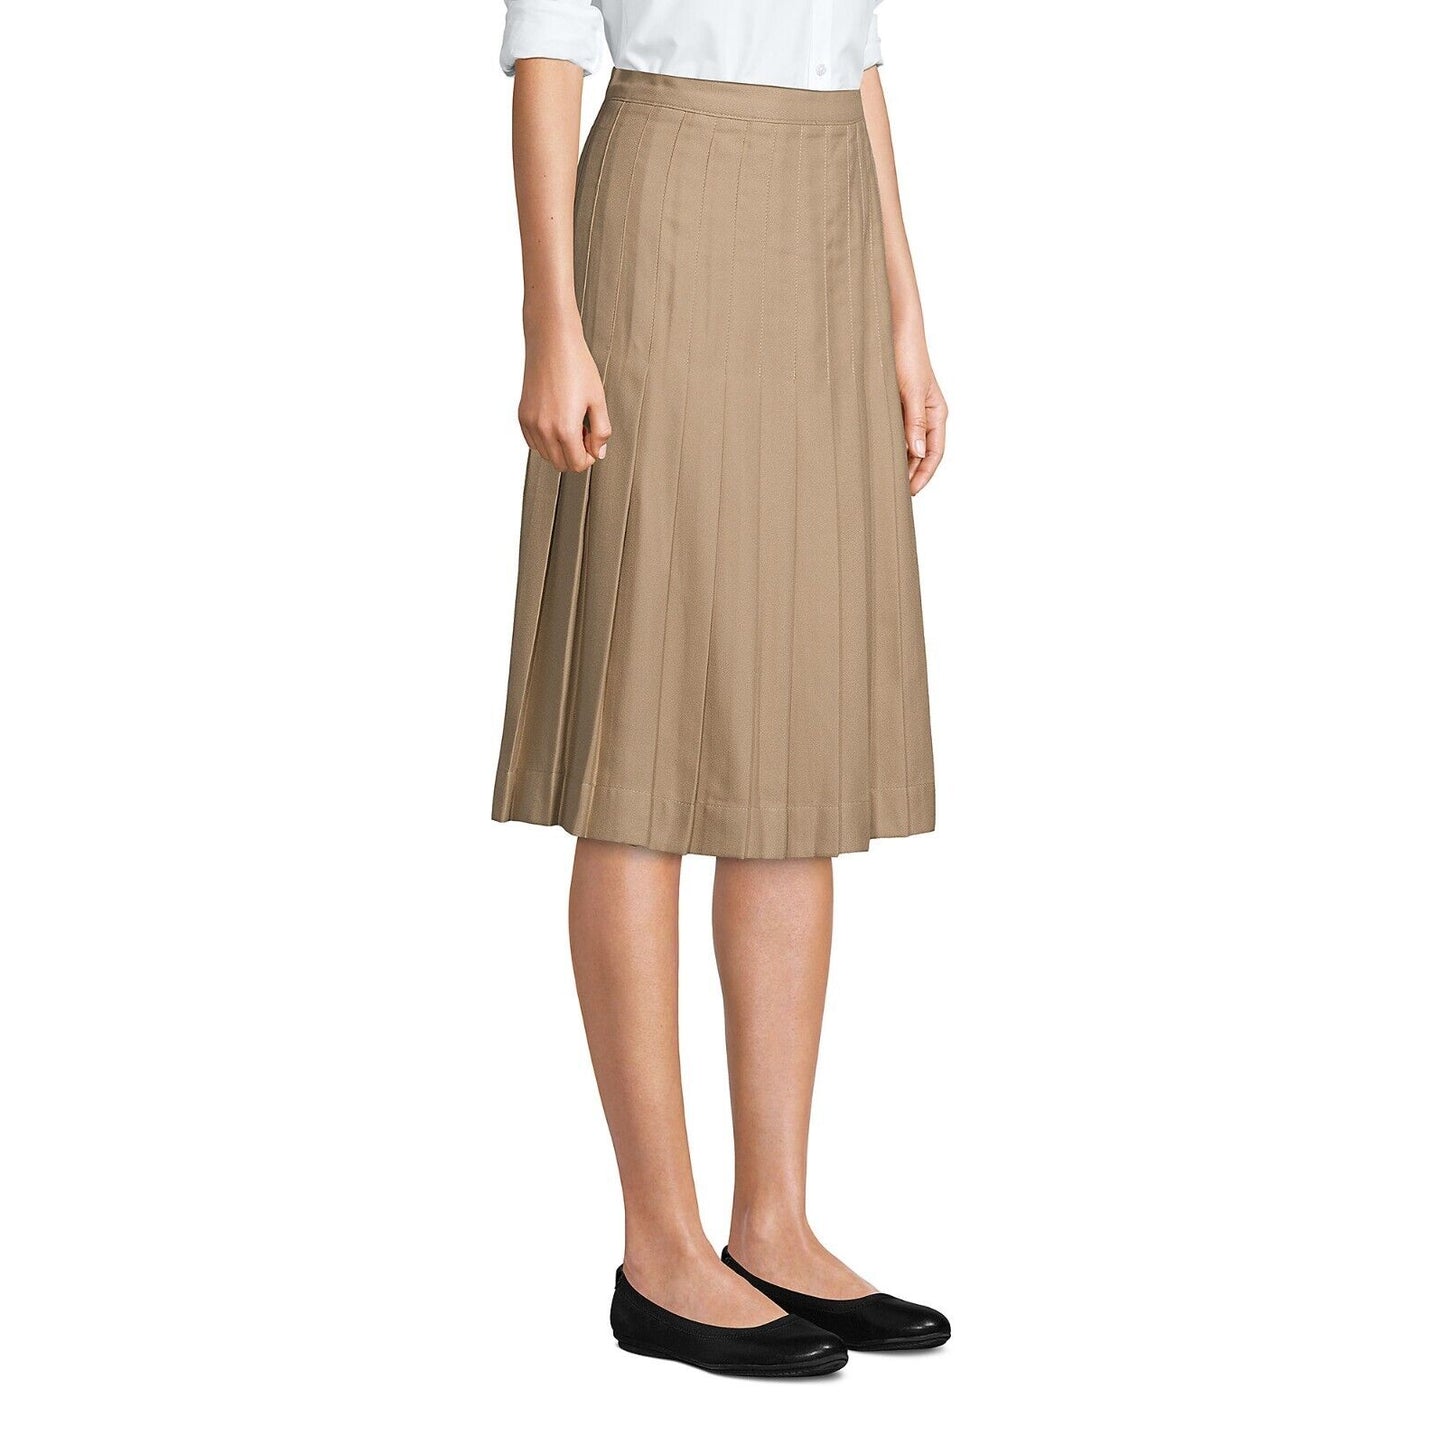 Women's Pleated Skirt Below the Knee Size 8